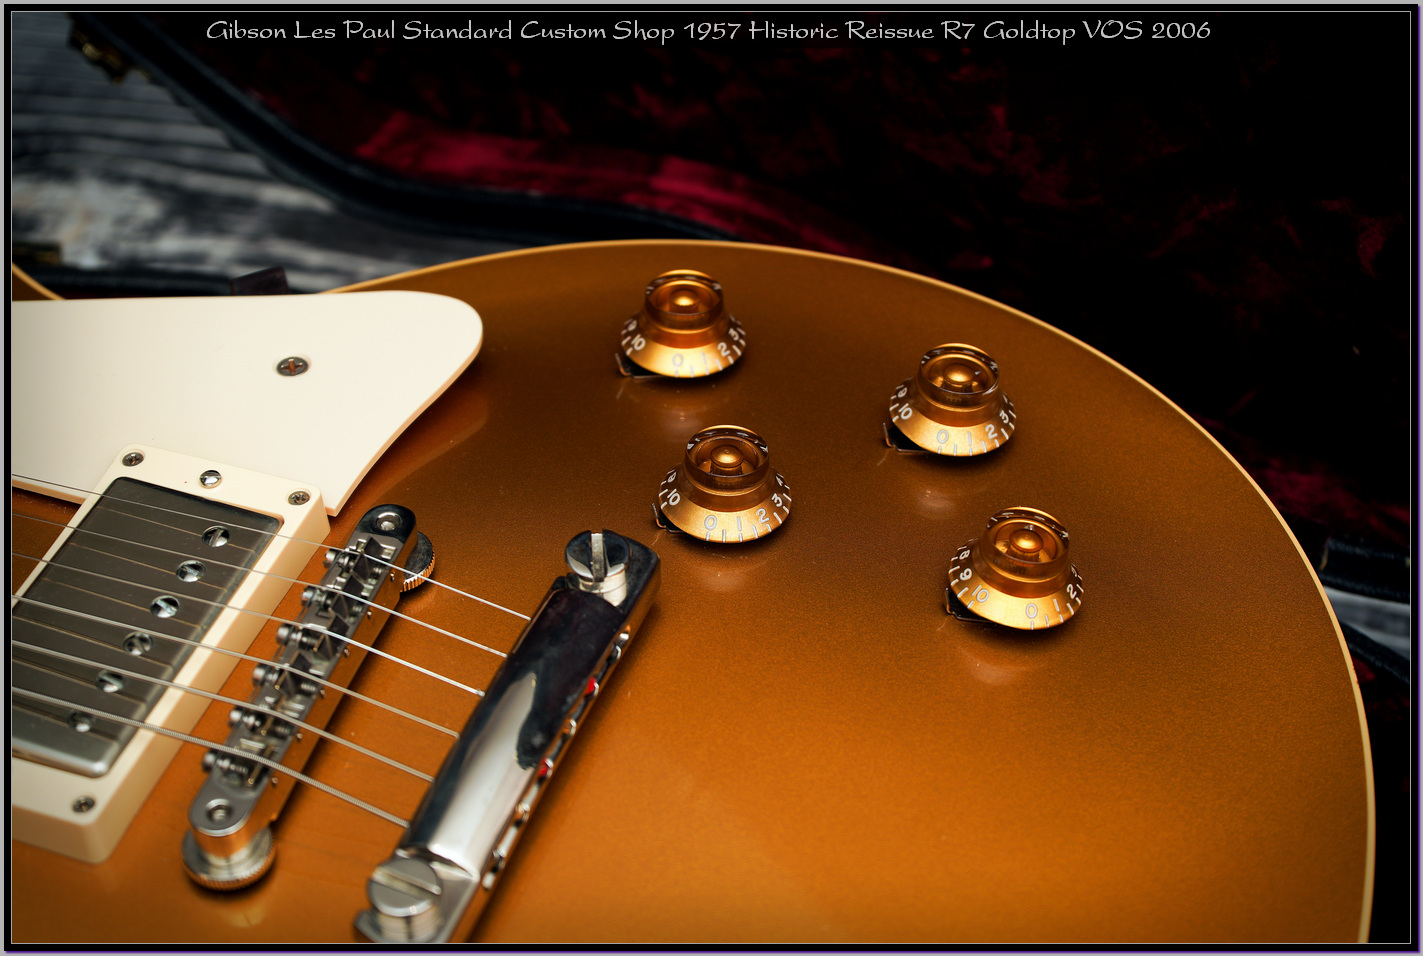 Gibson Les Paul Standard Custom Shop 1957 Historic Reissue R7 Goldtop VOS 2006 11_x1400.jpg